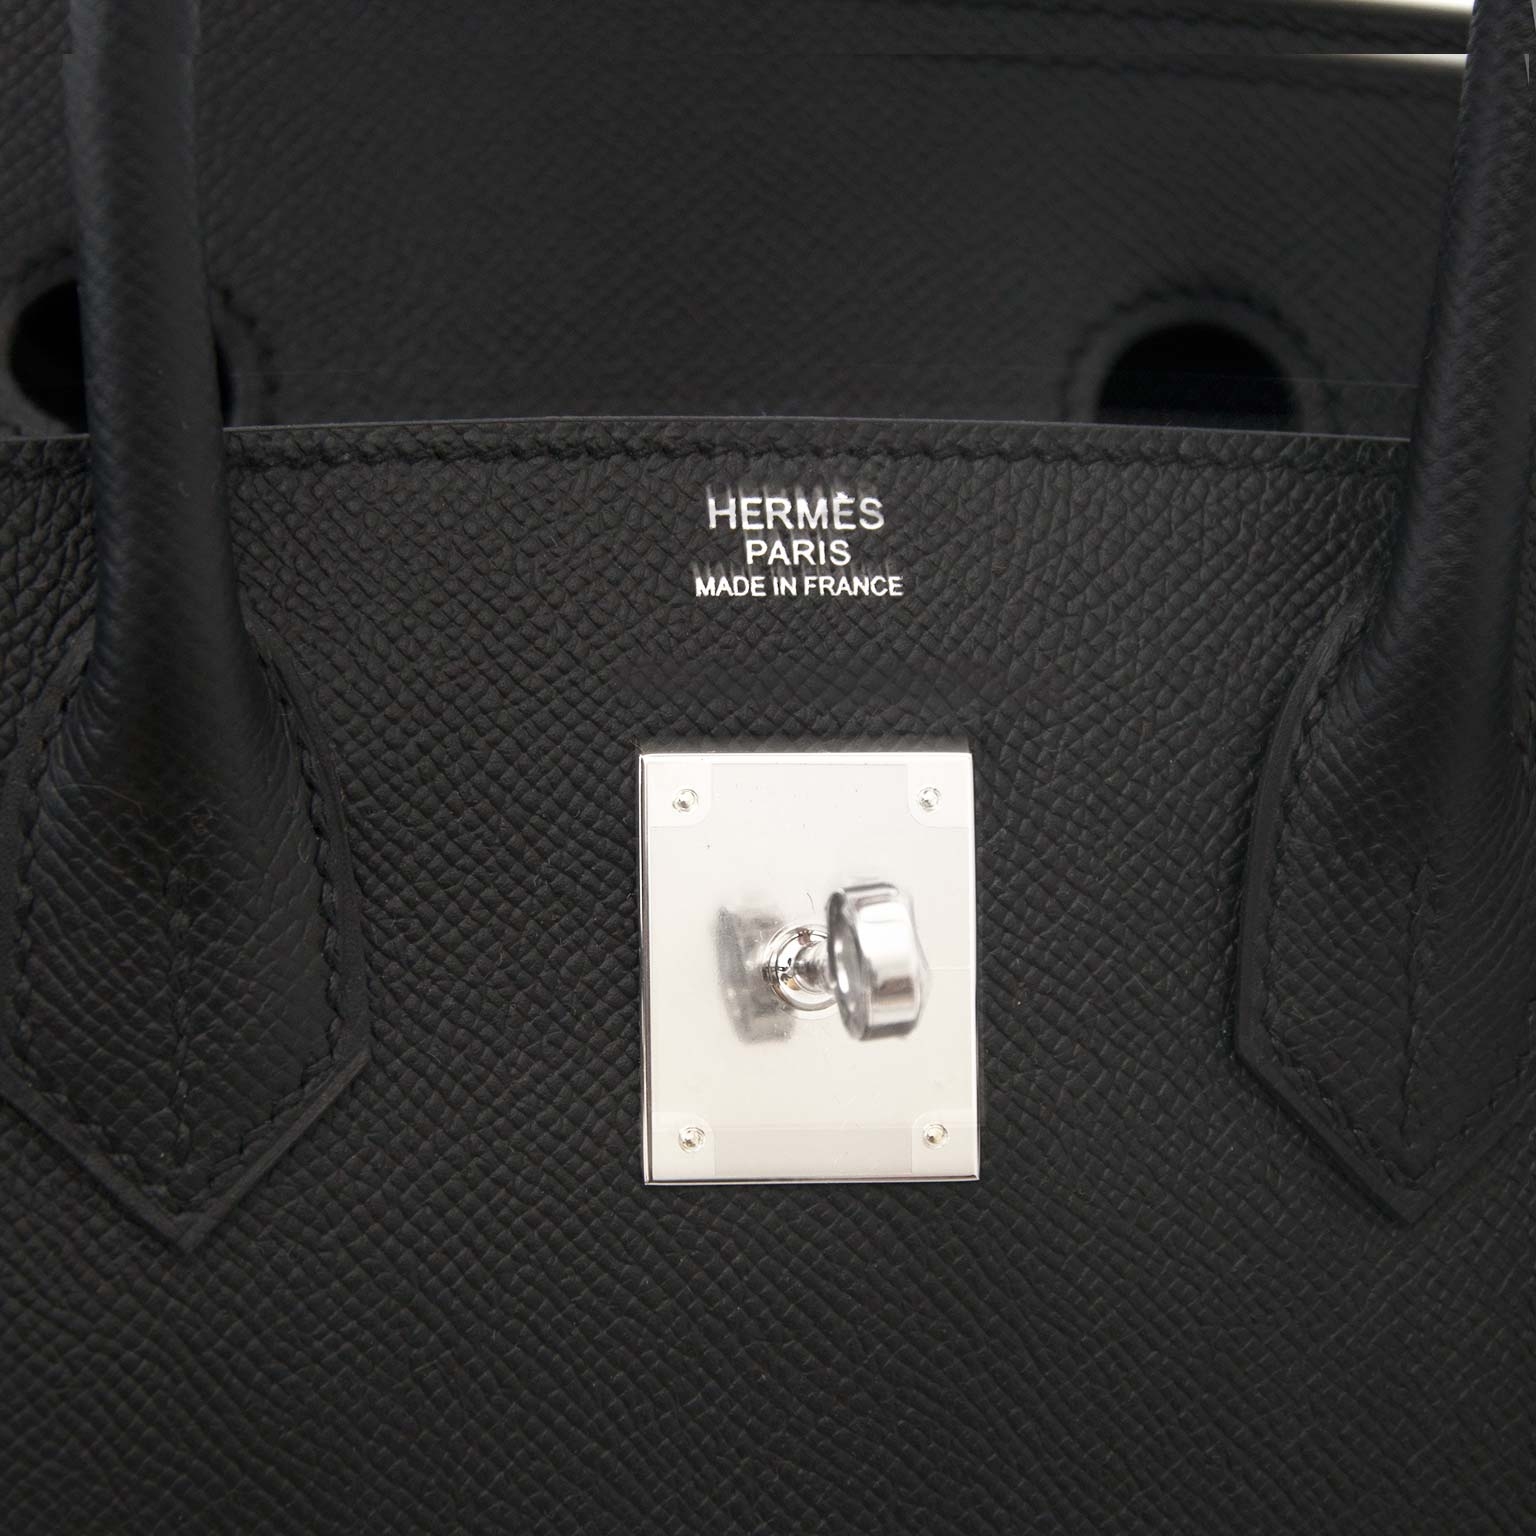 Hermès - Authenticated Birkin 30 Handbag - Leather Black Plain for Women, Never Worn